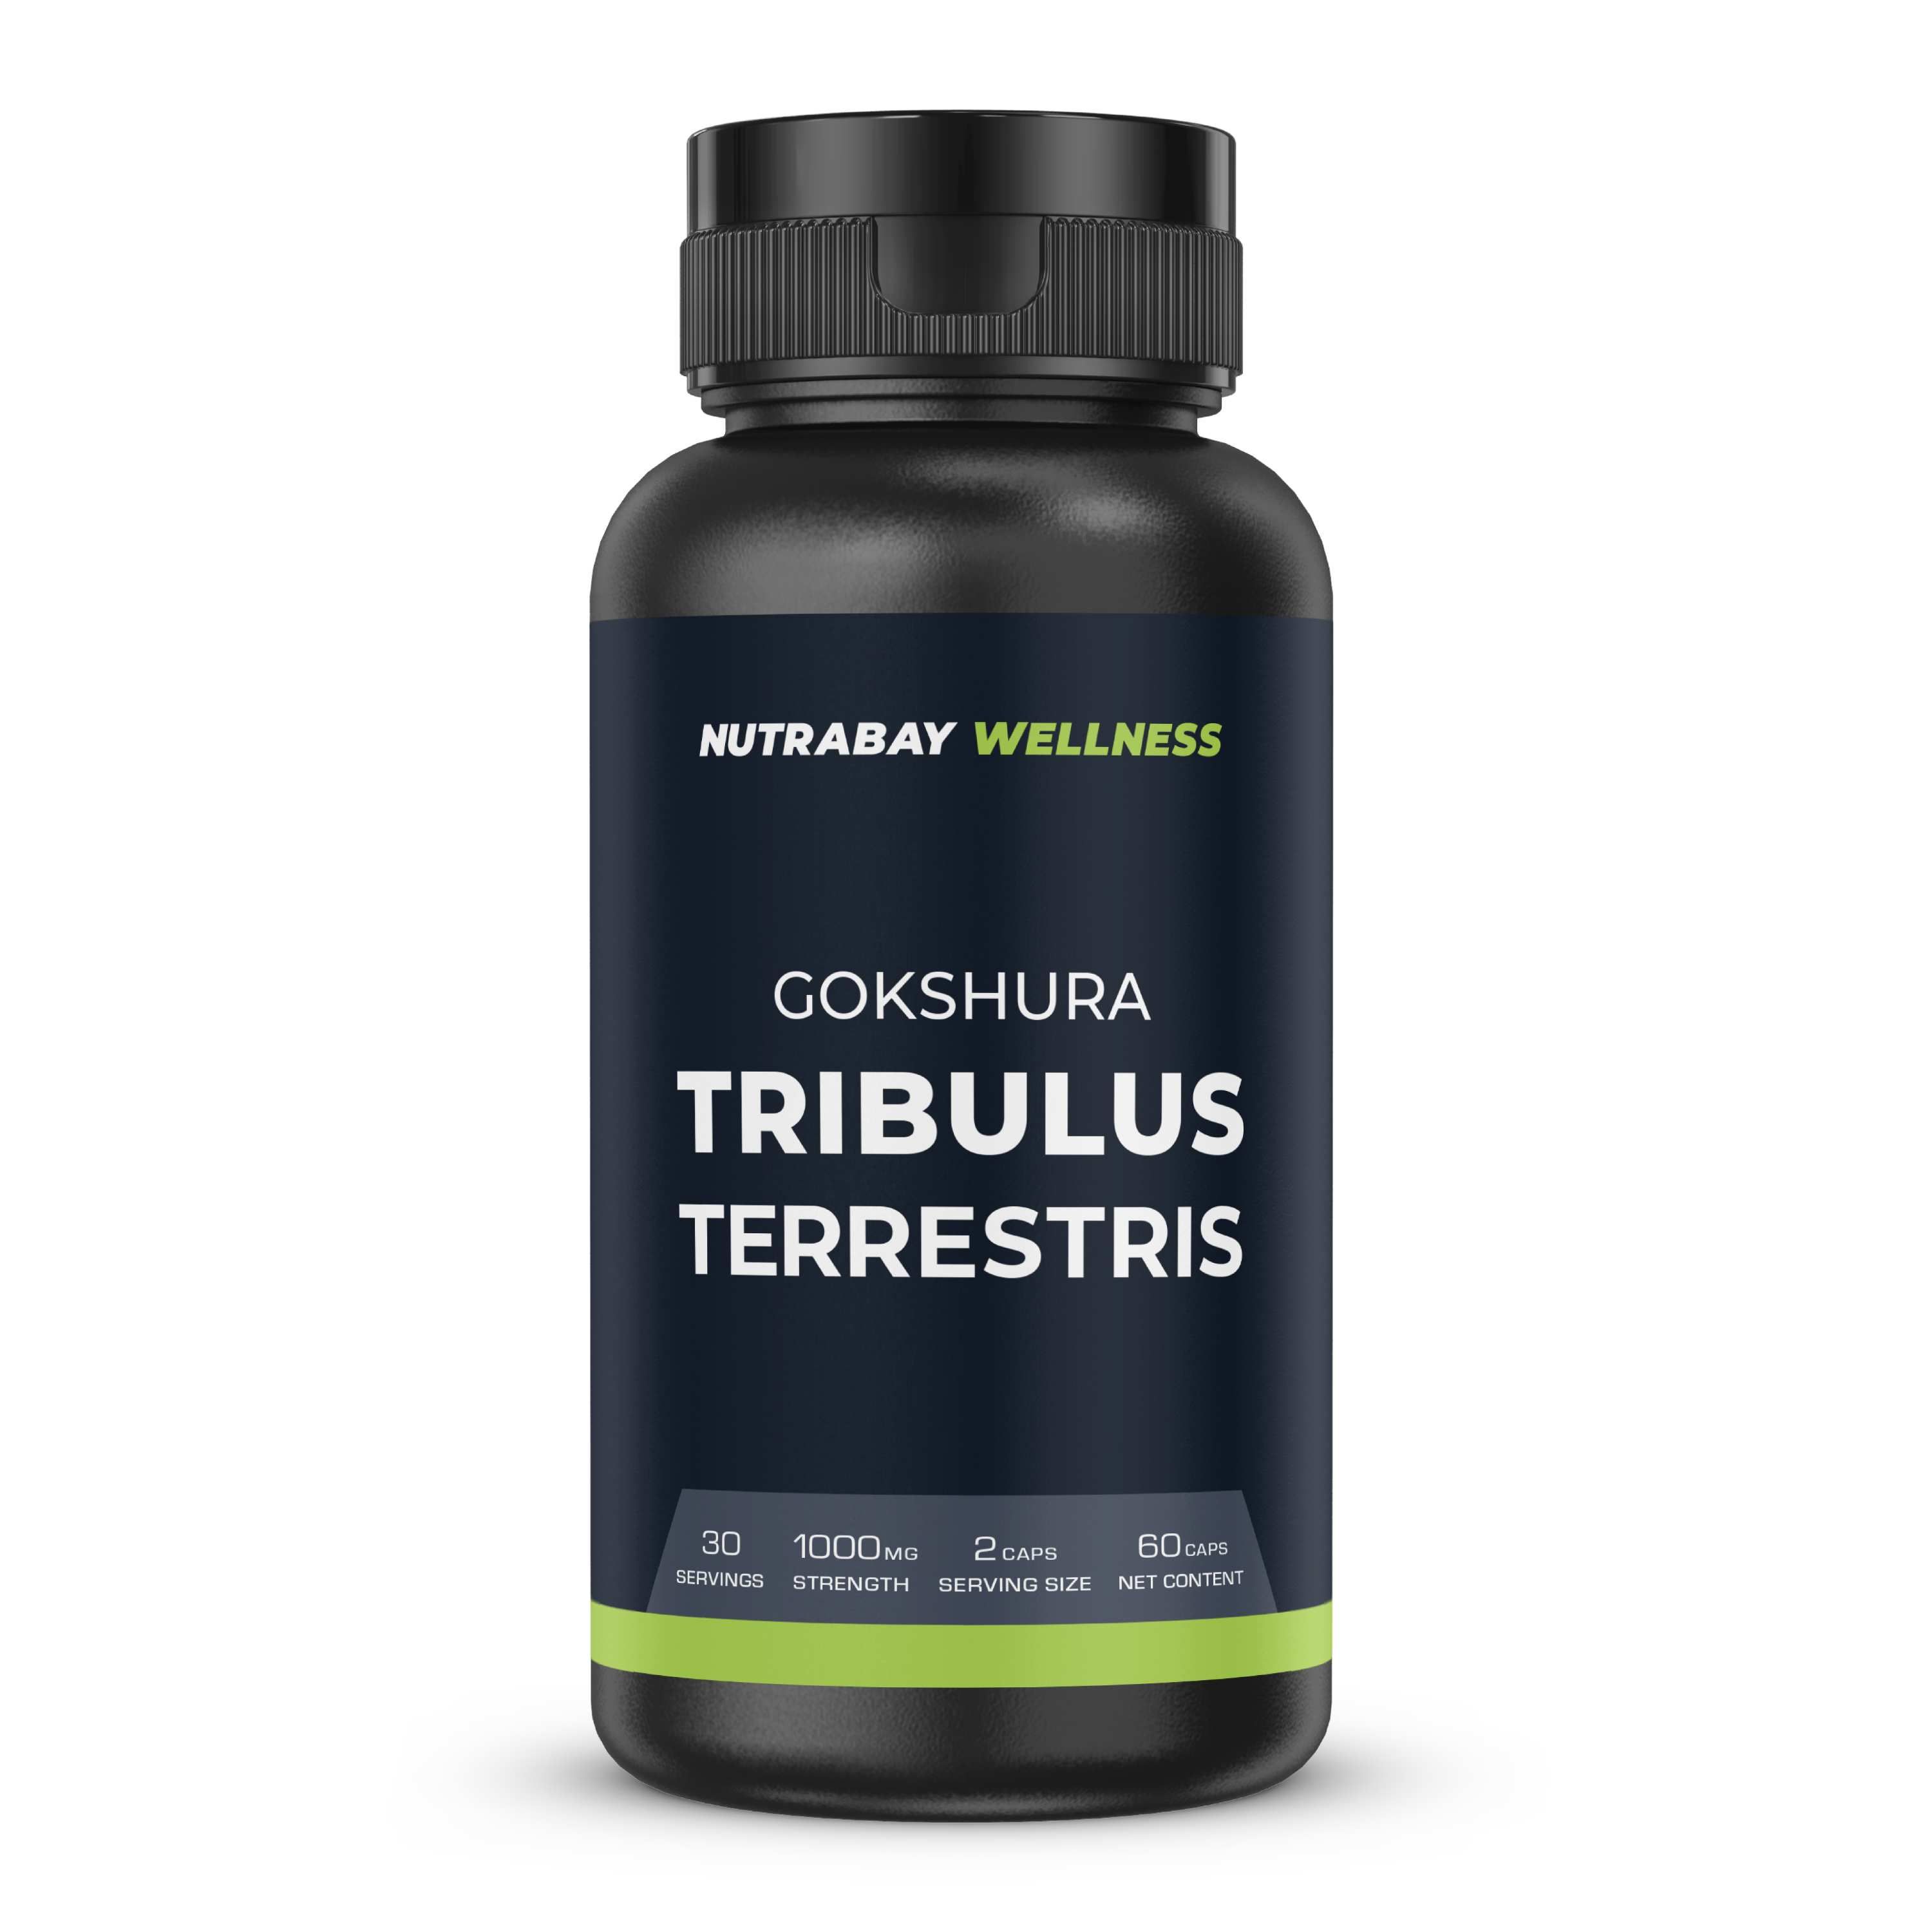 Nutrabay Wellness Tribulus Terrestris Extract Image